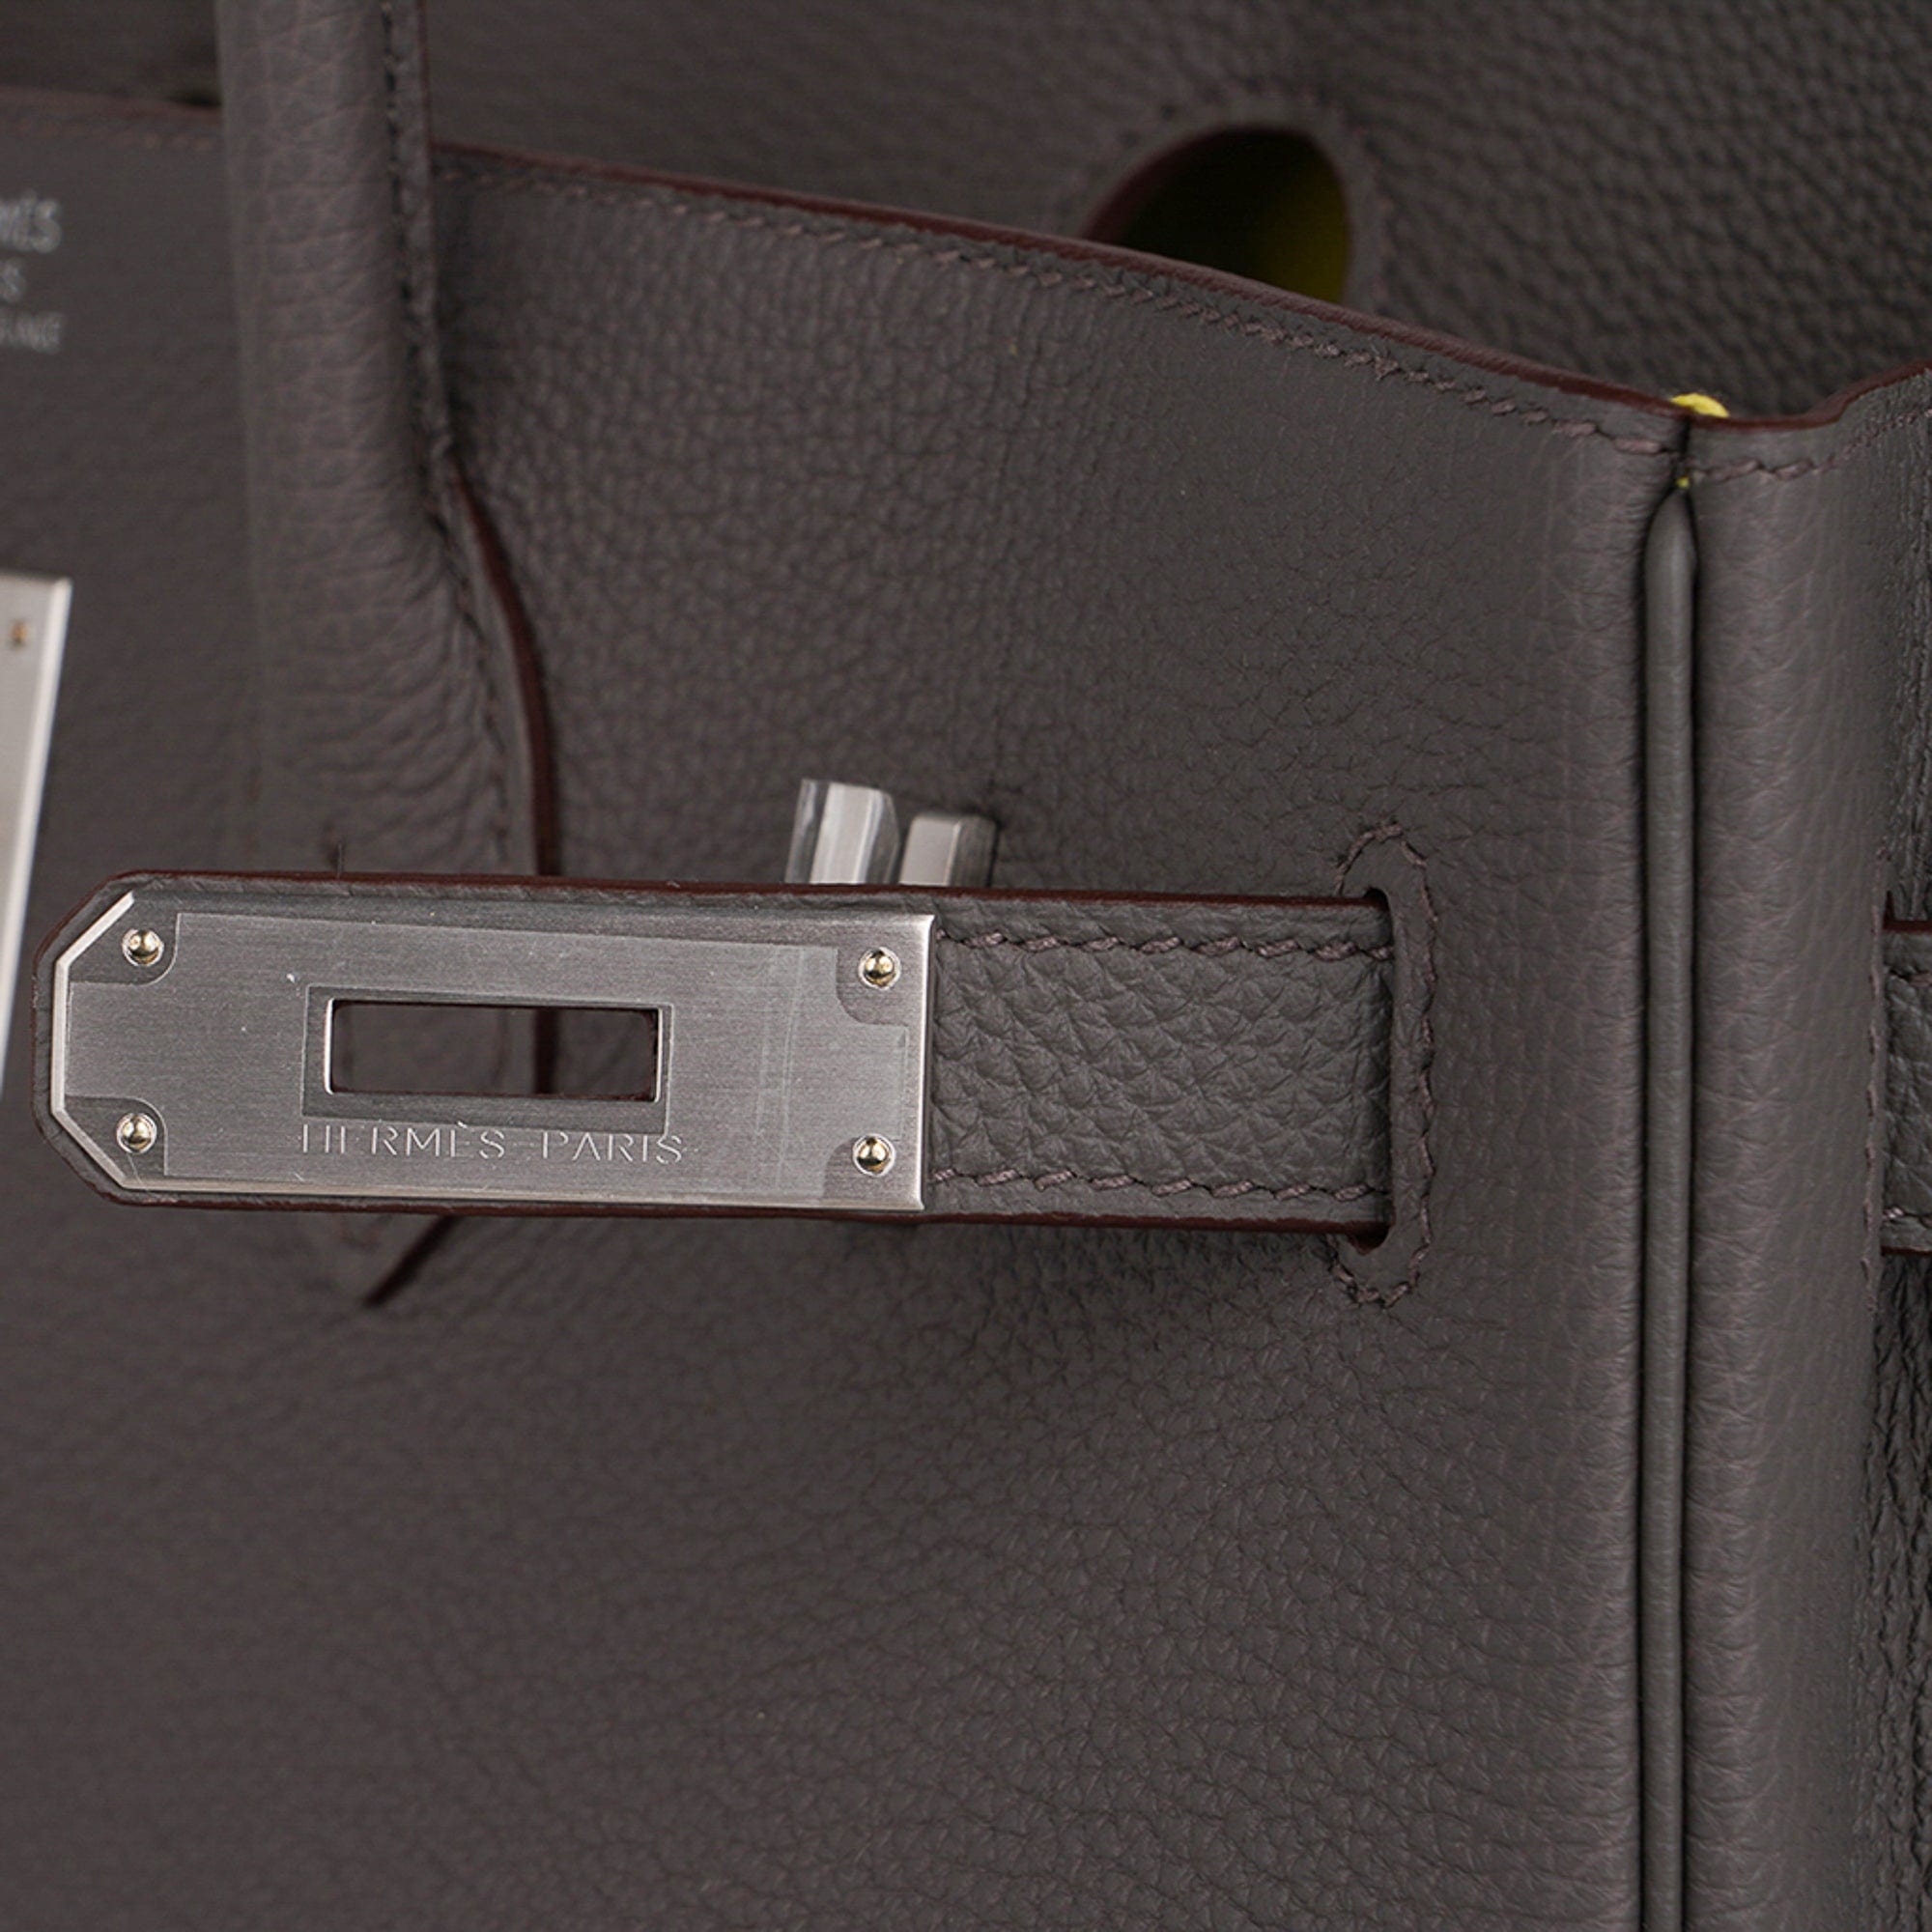 Hermès Gris Etain Birkin 35cm of Togo Leather with Palladium Hardware, Handbags and Accessories Online, Ecommerce Retail